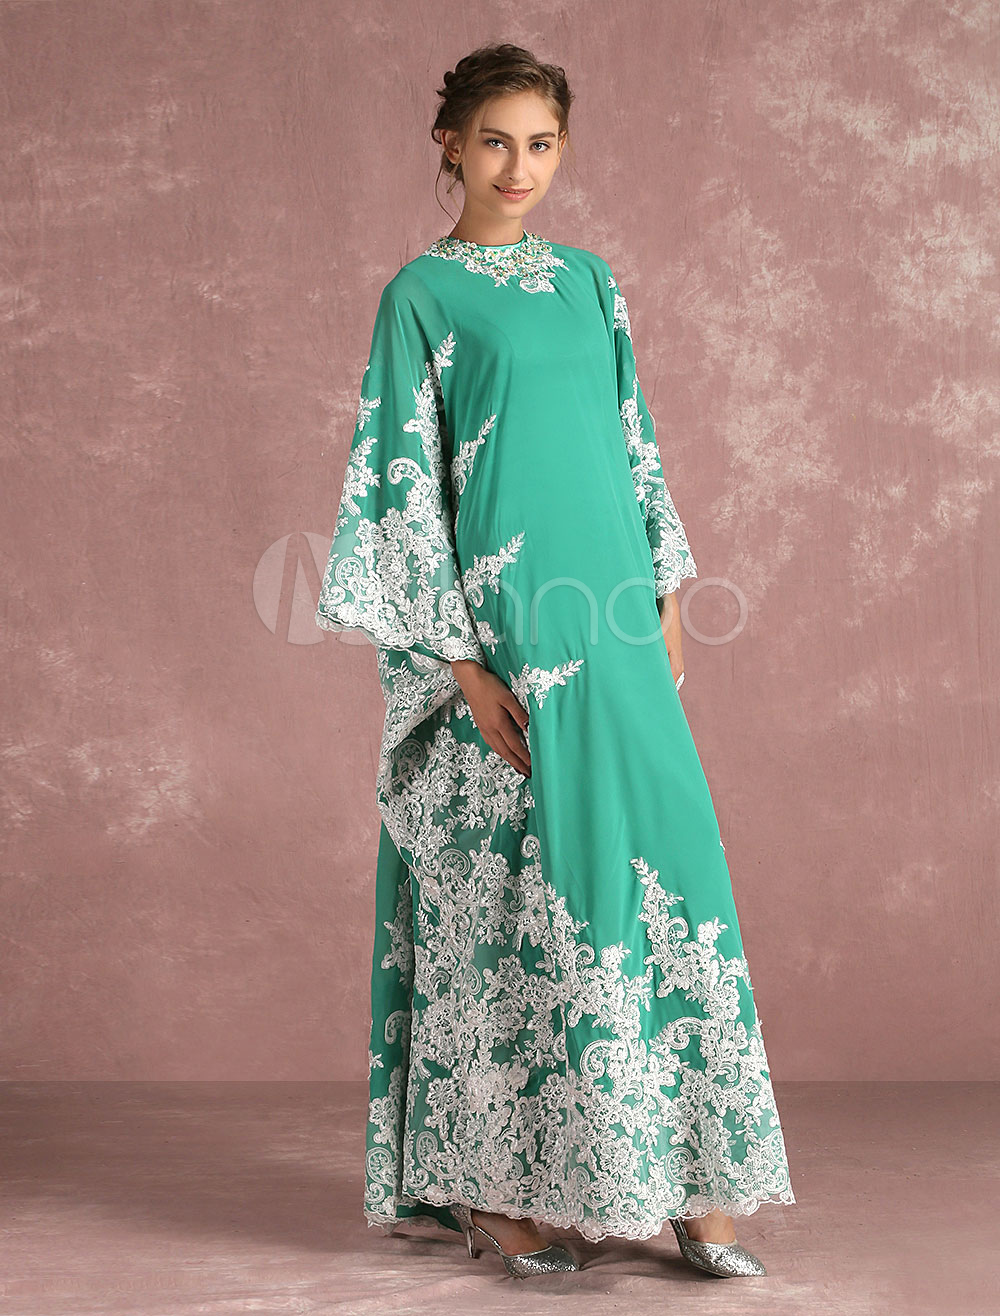 Muslim Evening Dress Lace Applique 2 Piece Mother's Dress Floor Length Occasion Dress In Blue Green (Wedding Evening Dresses) photo